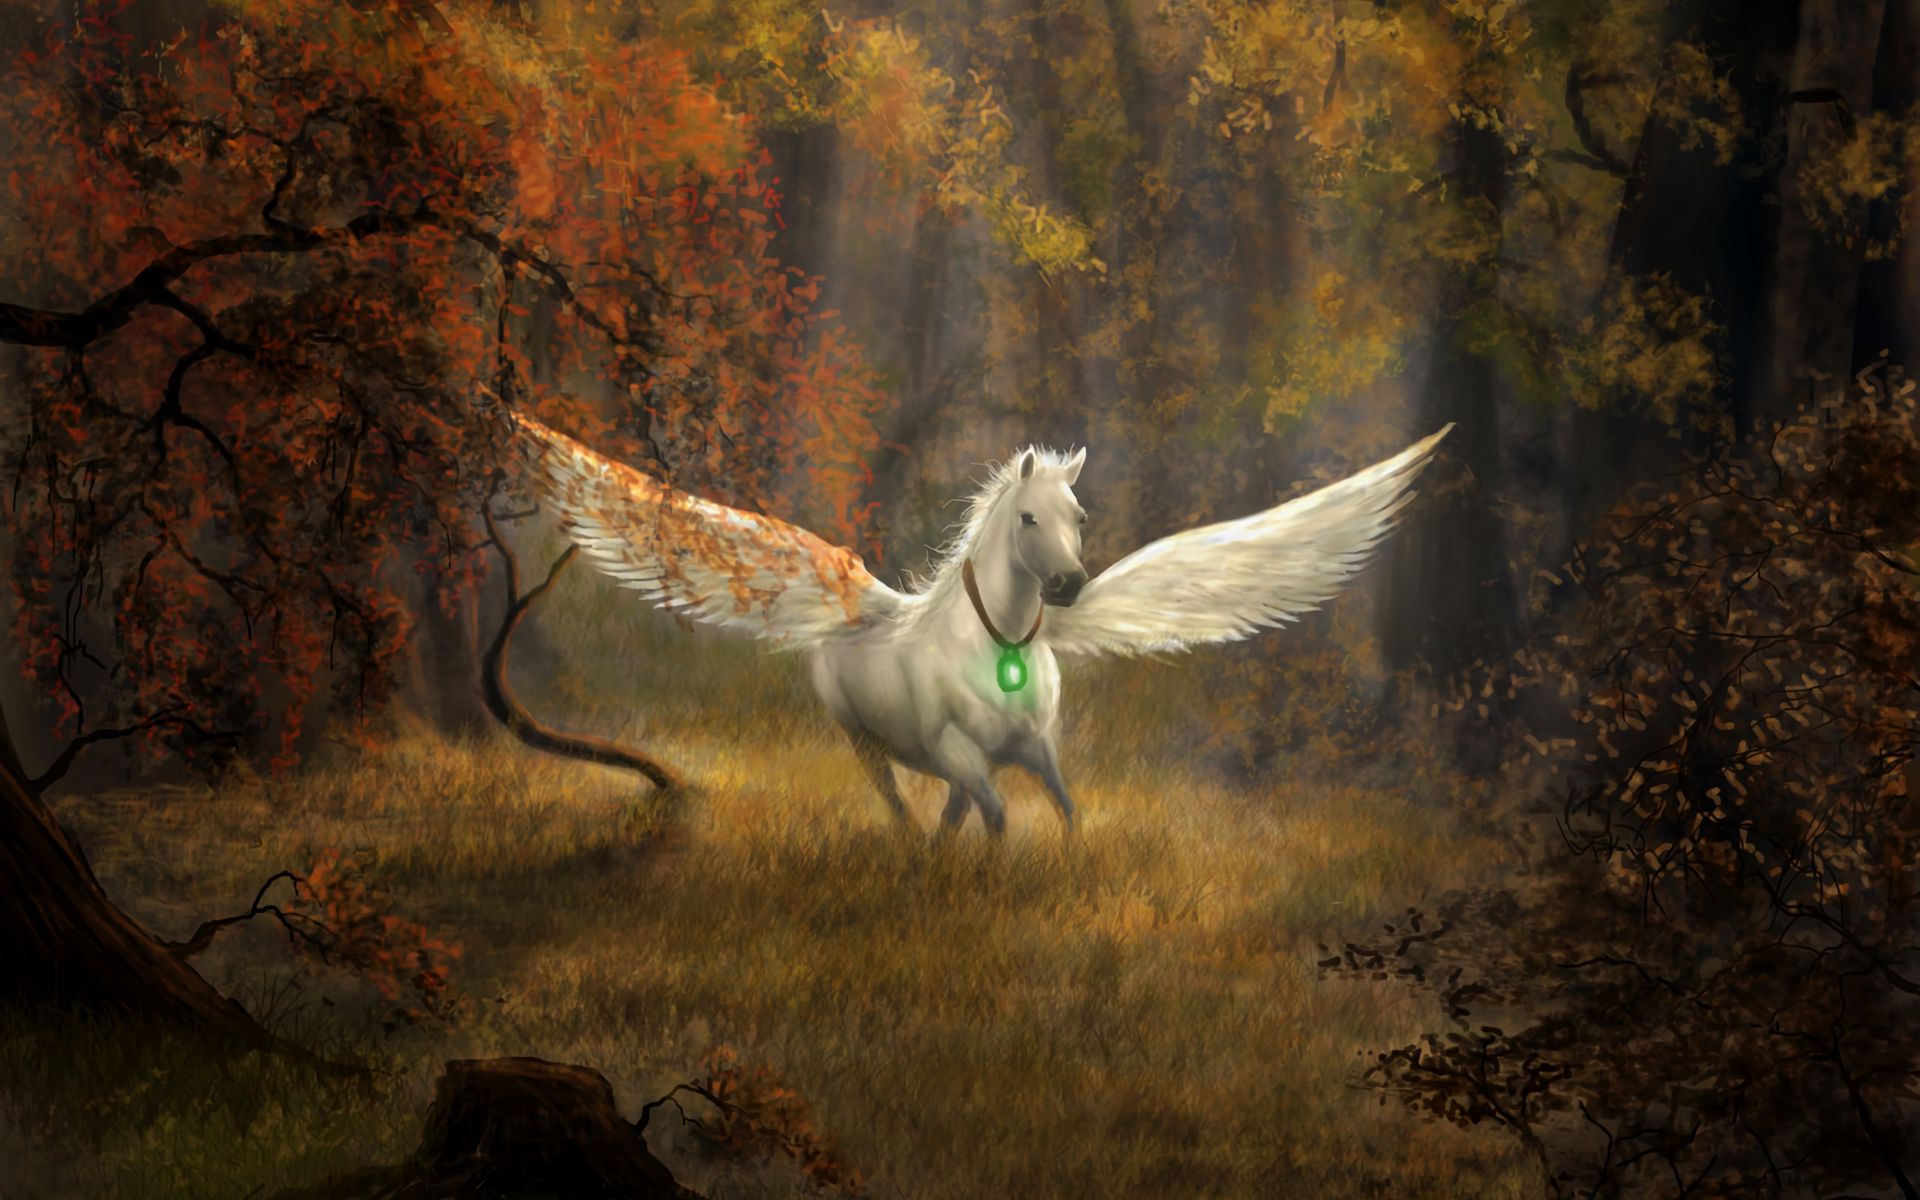 fantasy winged horse wallpaper